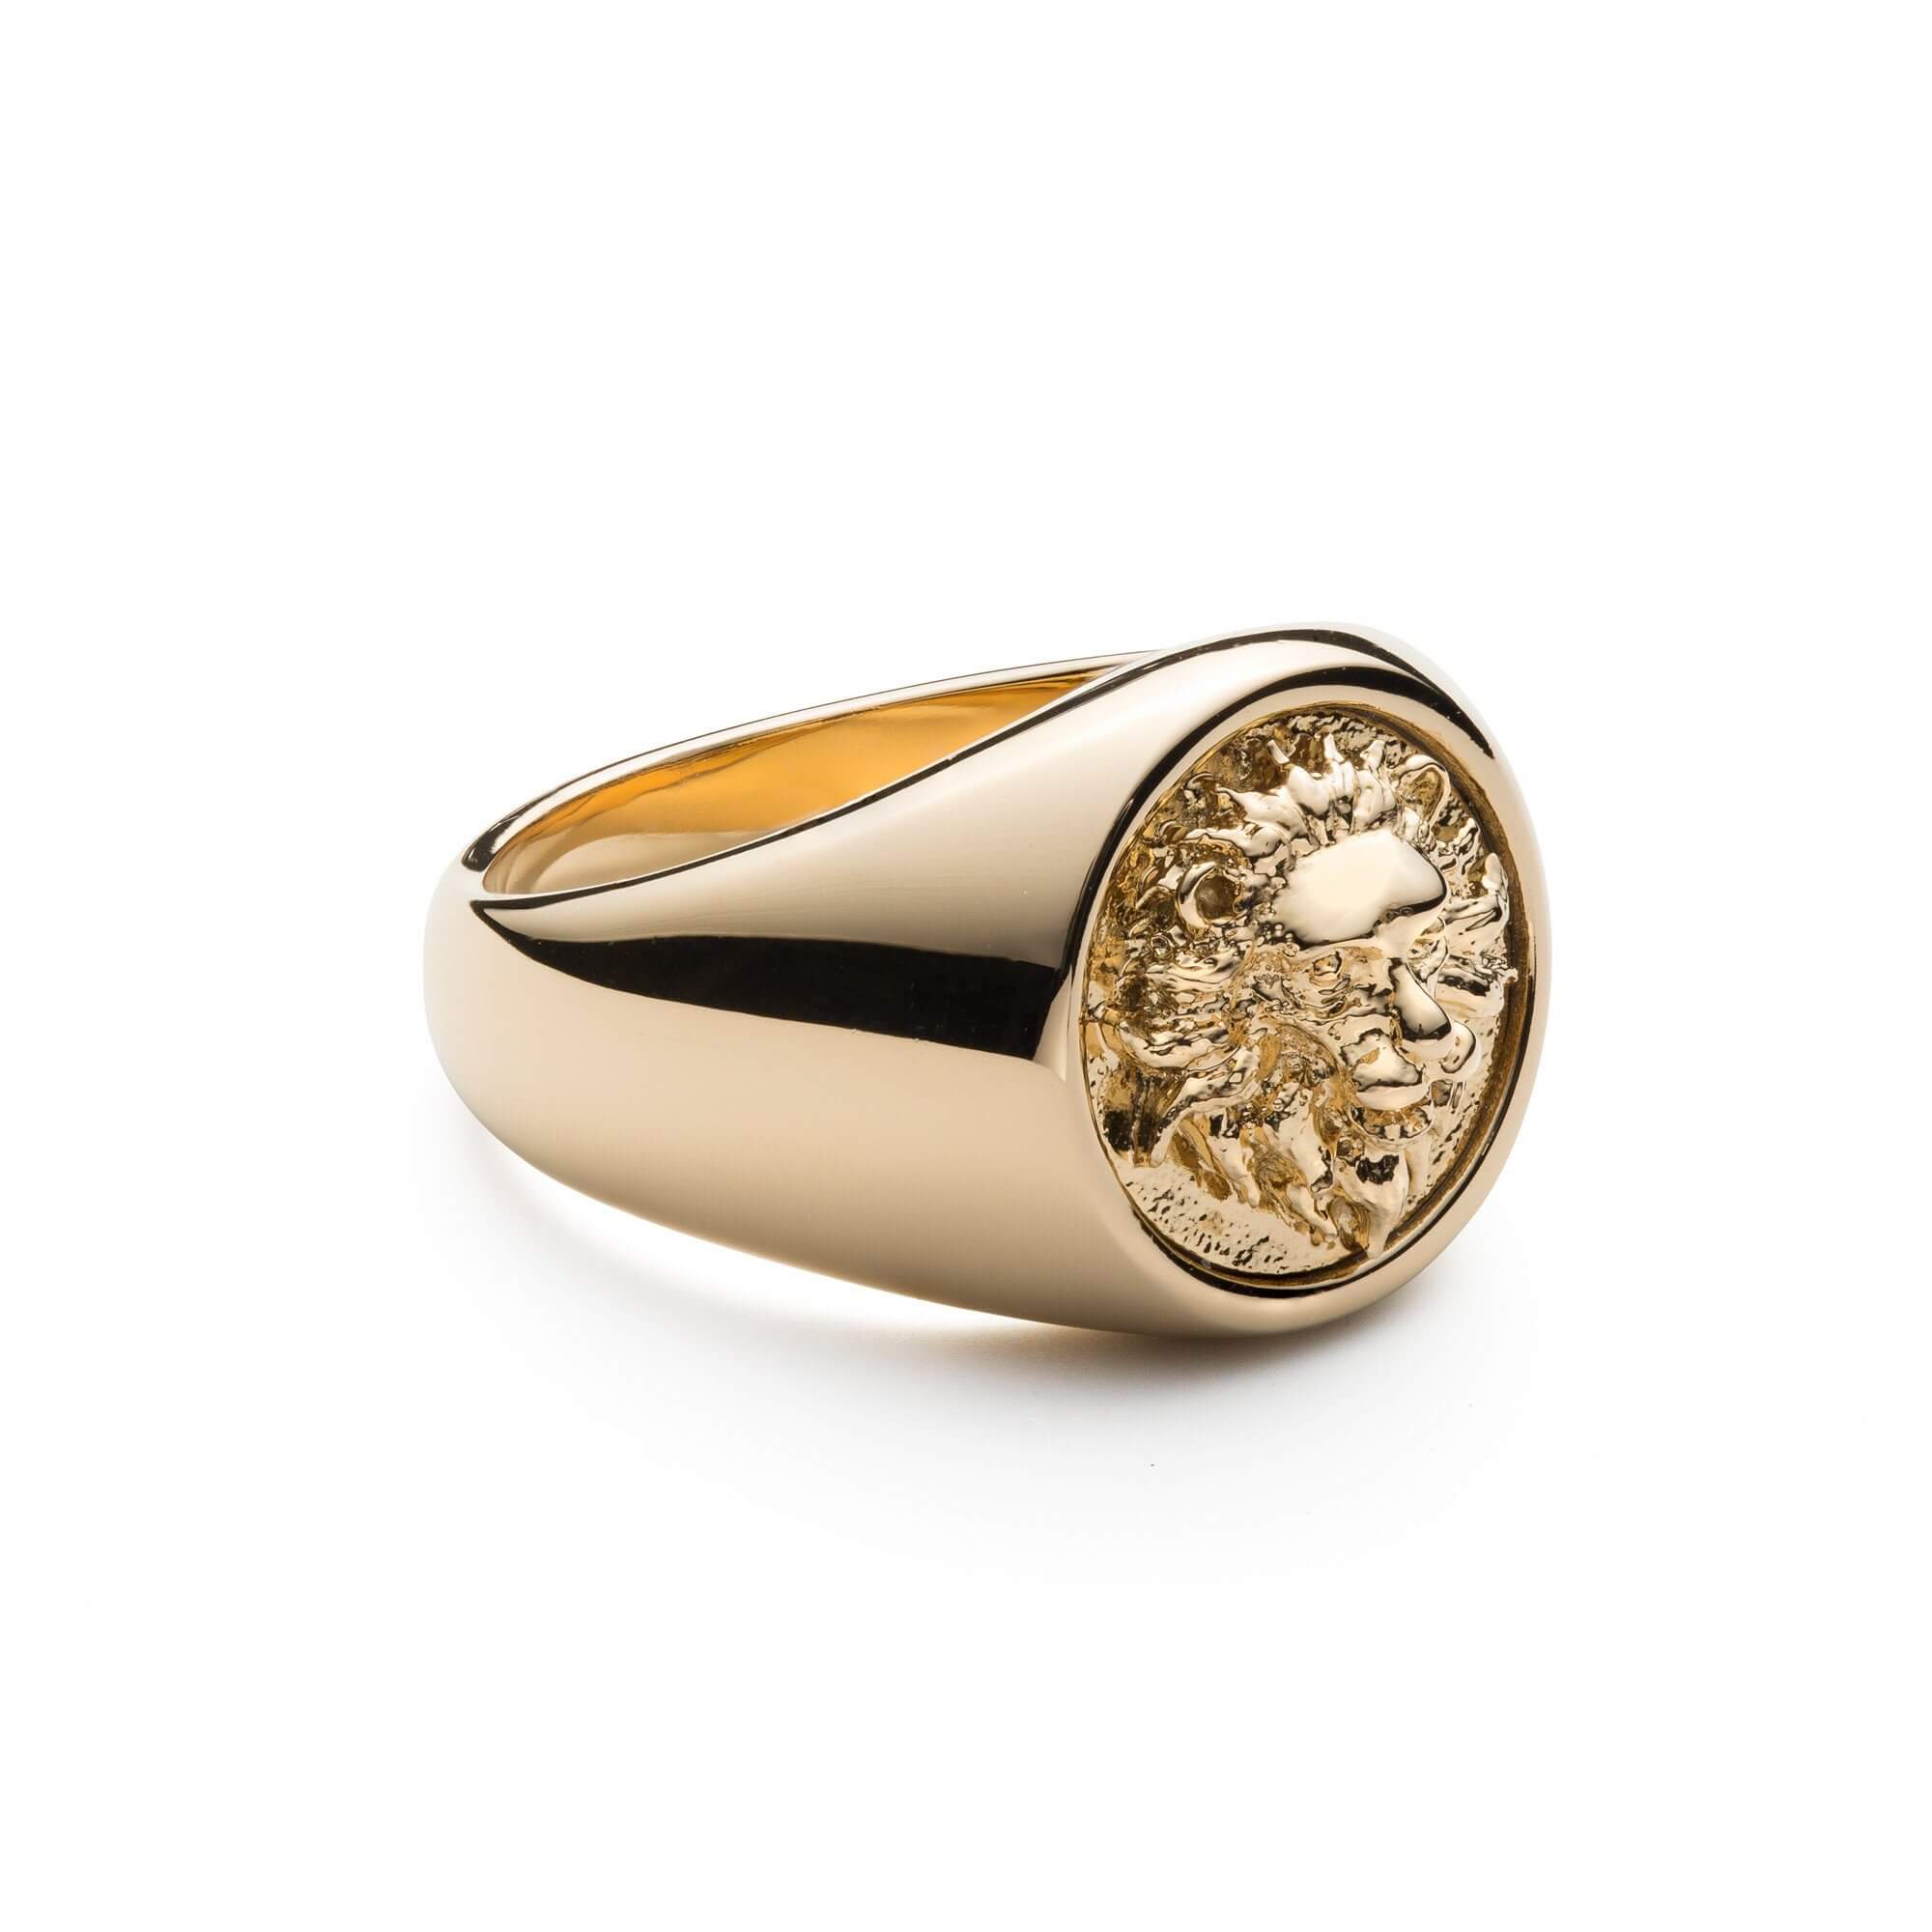 Buy Gold Lion Ring for Men Gold Animal Ring 14K Gold Men Ring Lion Head  Animal Jewelry Online in India - Etsy